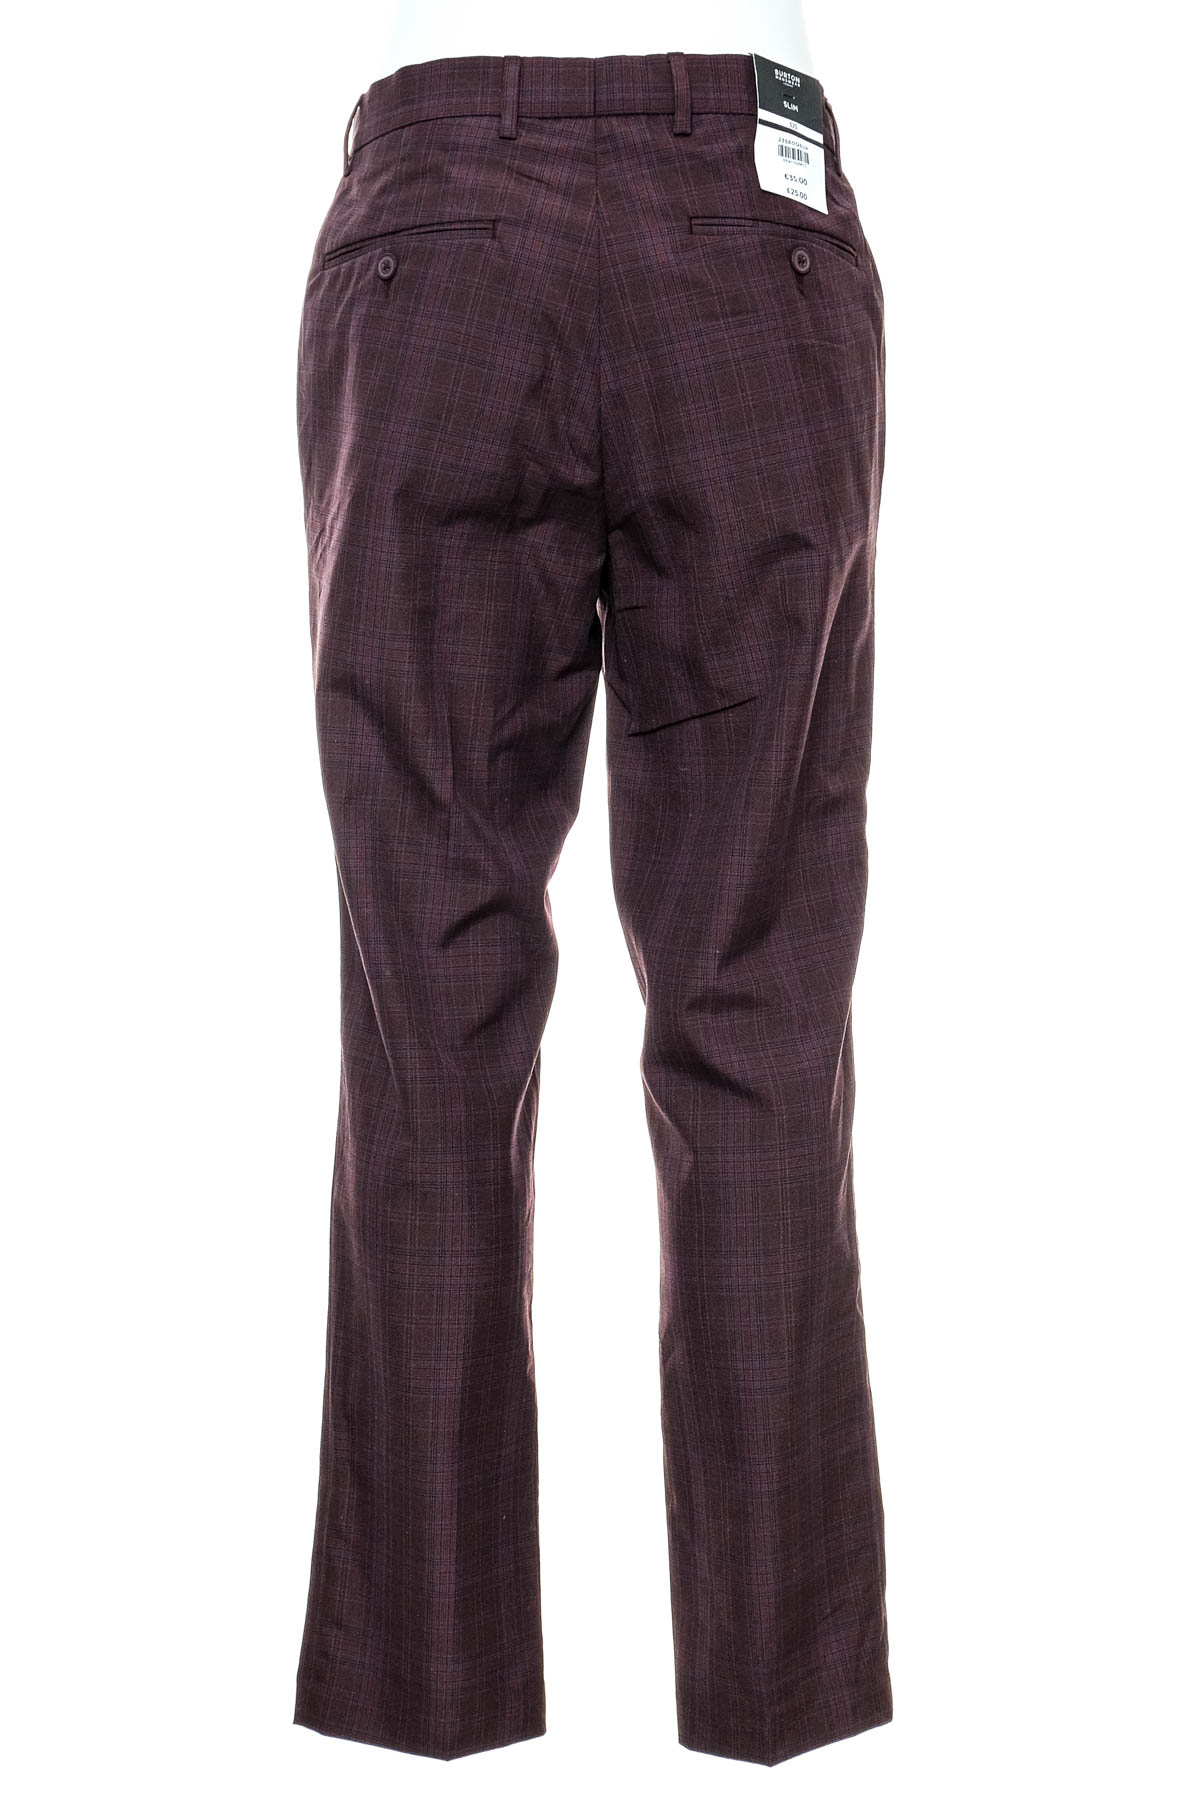 Pantalon pentru bărbați - Burton - 1